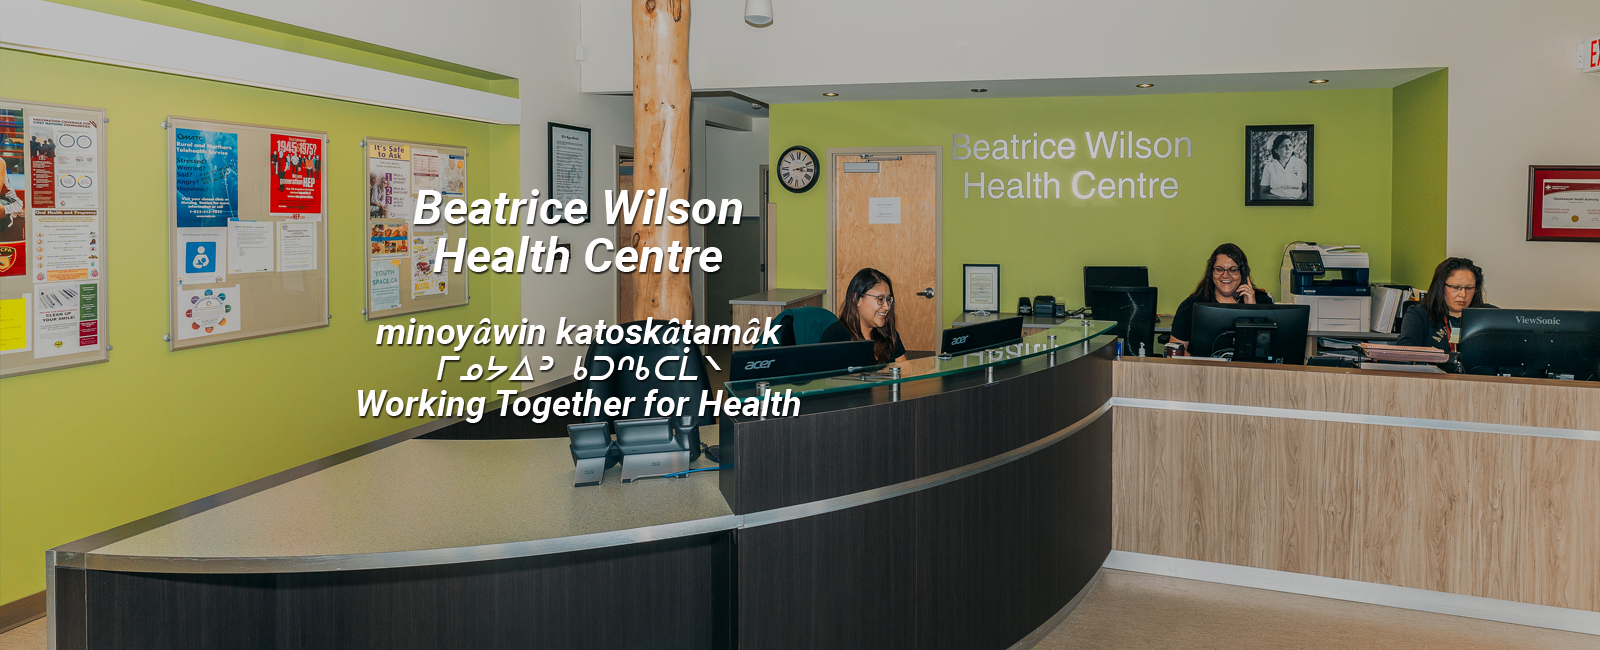 Beatrice Wilson Health Centre